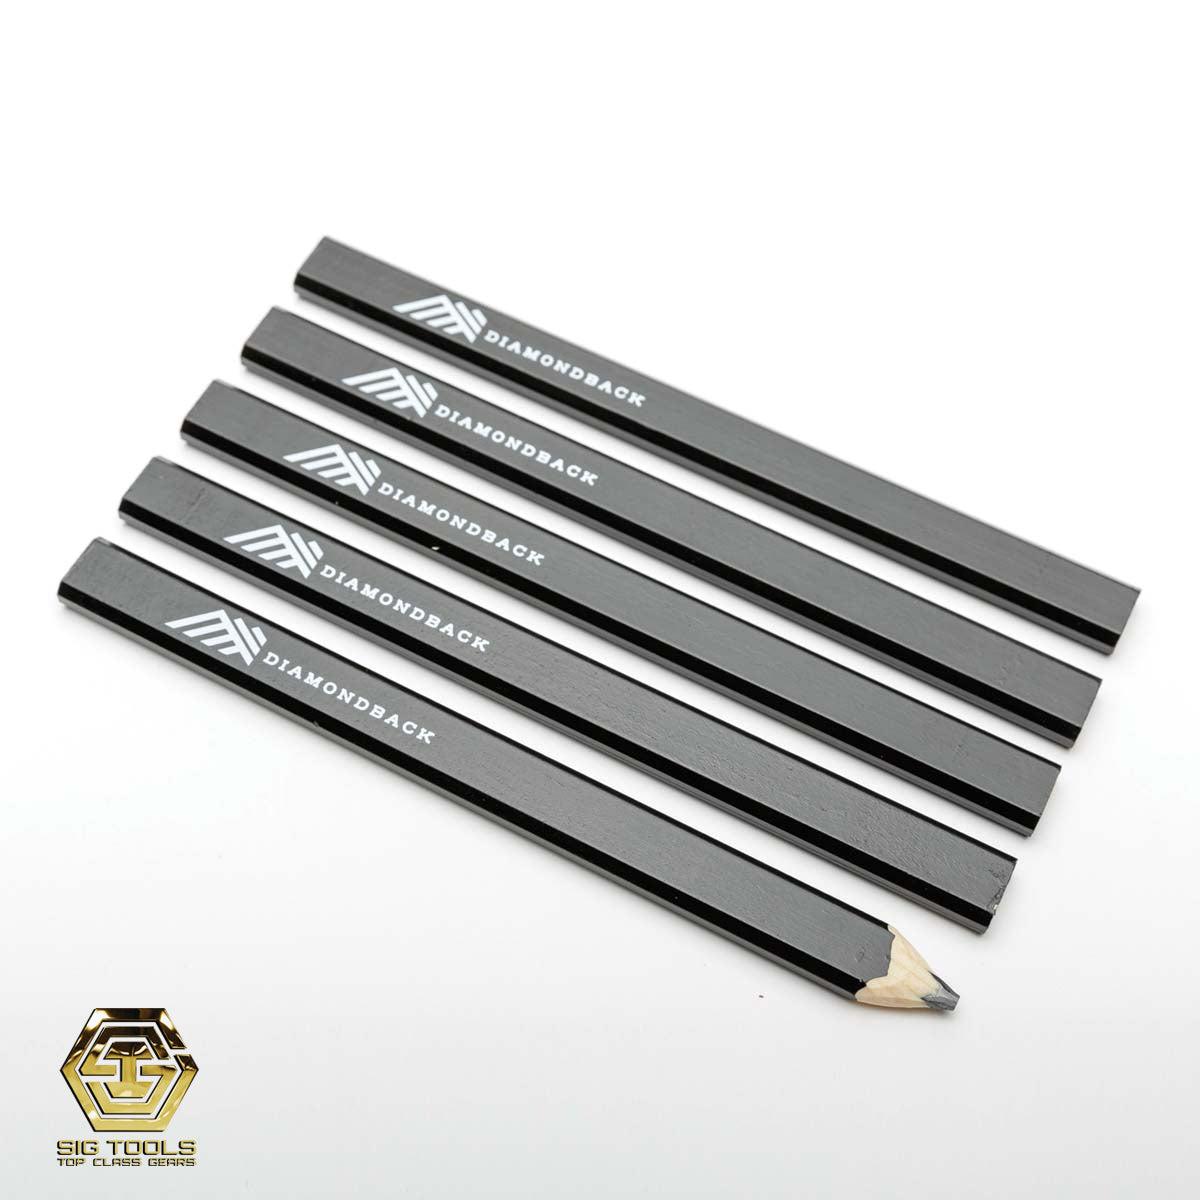 Black Carpenter Pencil Pack/ DB Carpenter Pencils Black-5 Pak /"Black Carpenter Pencils - Pack of 5 by Diamondback"  